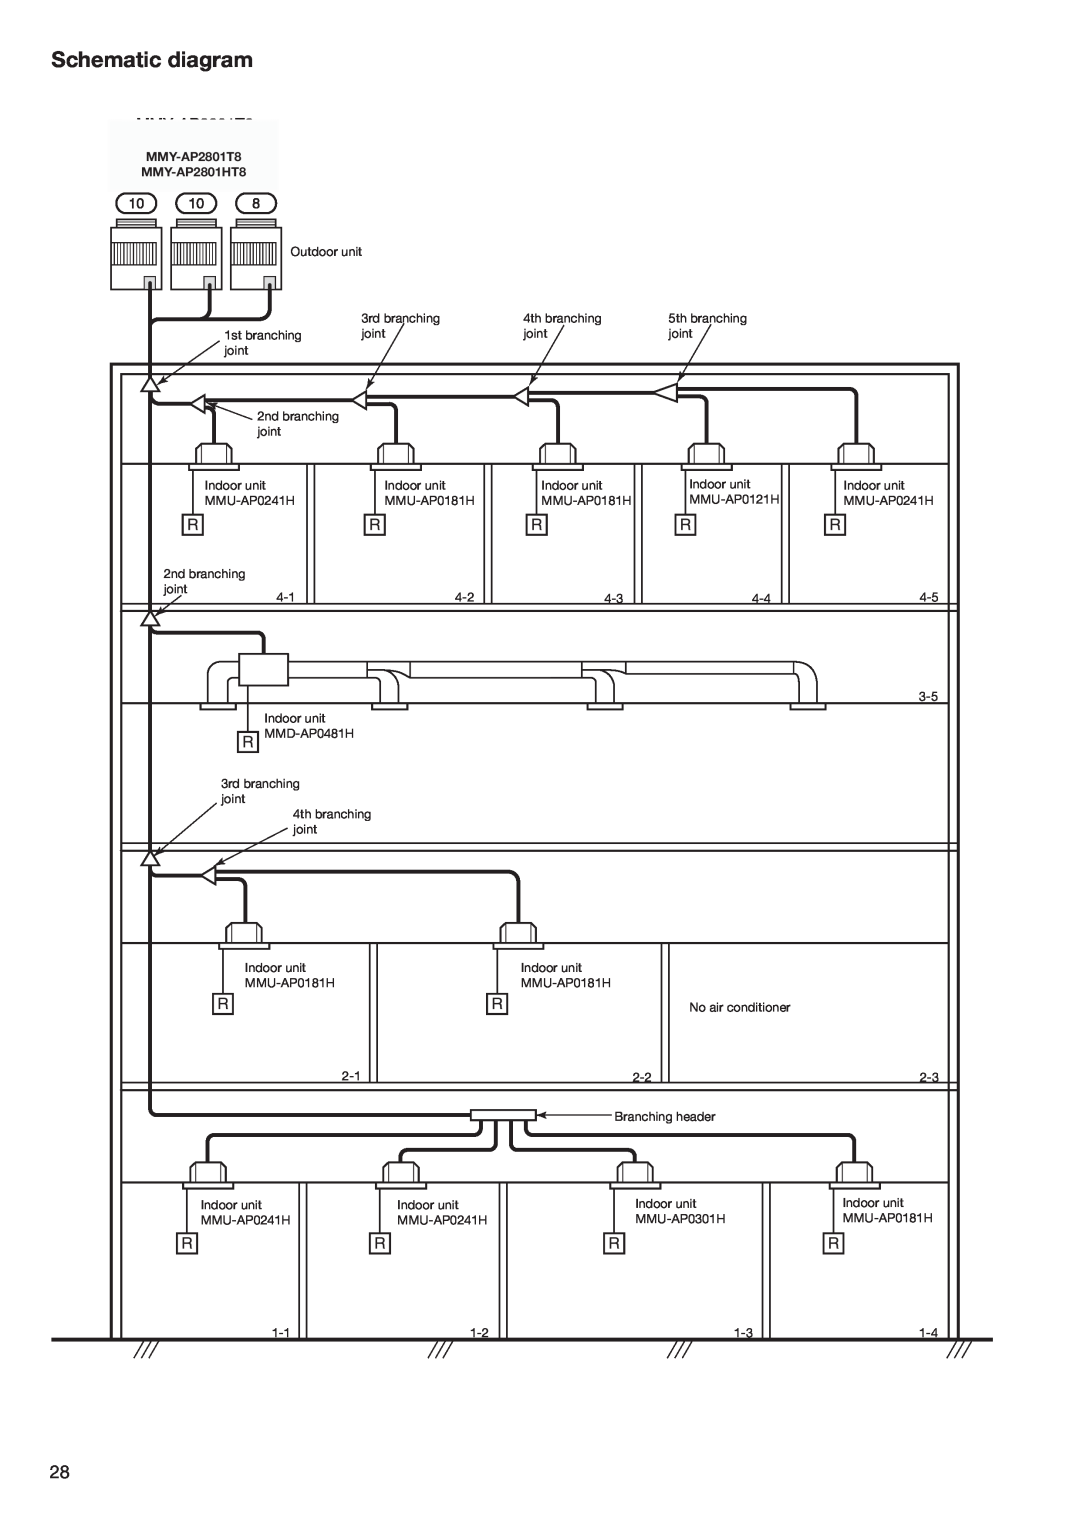 Toshiba HFC R-410A manual Schematic diagram, MMY-AP2801T8 MMY-AP2801HT8 